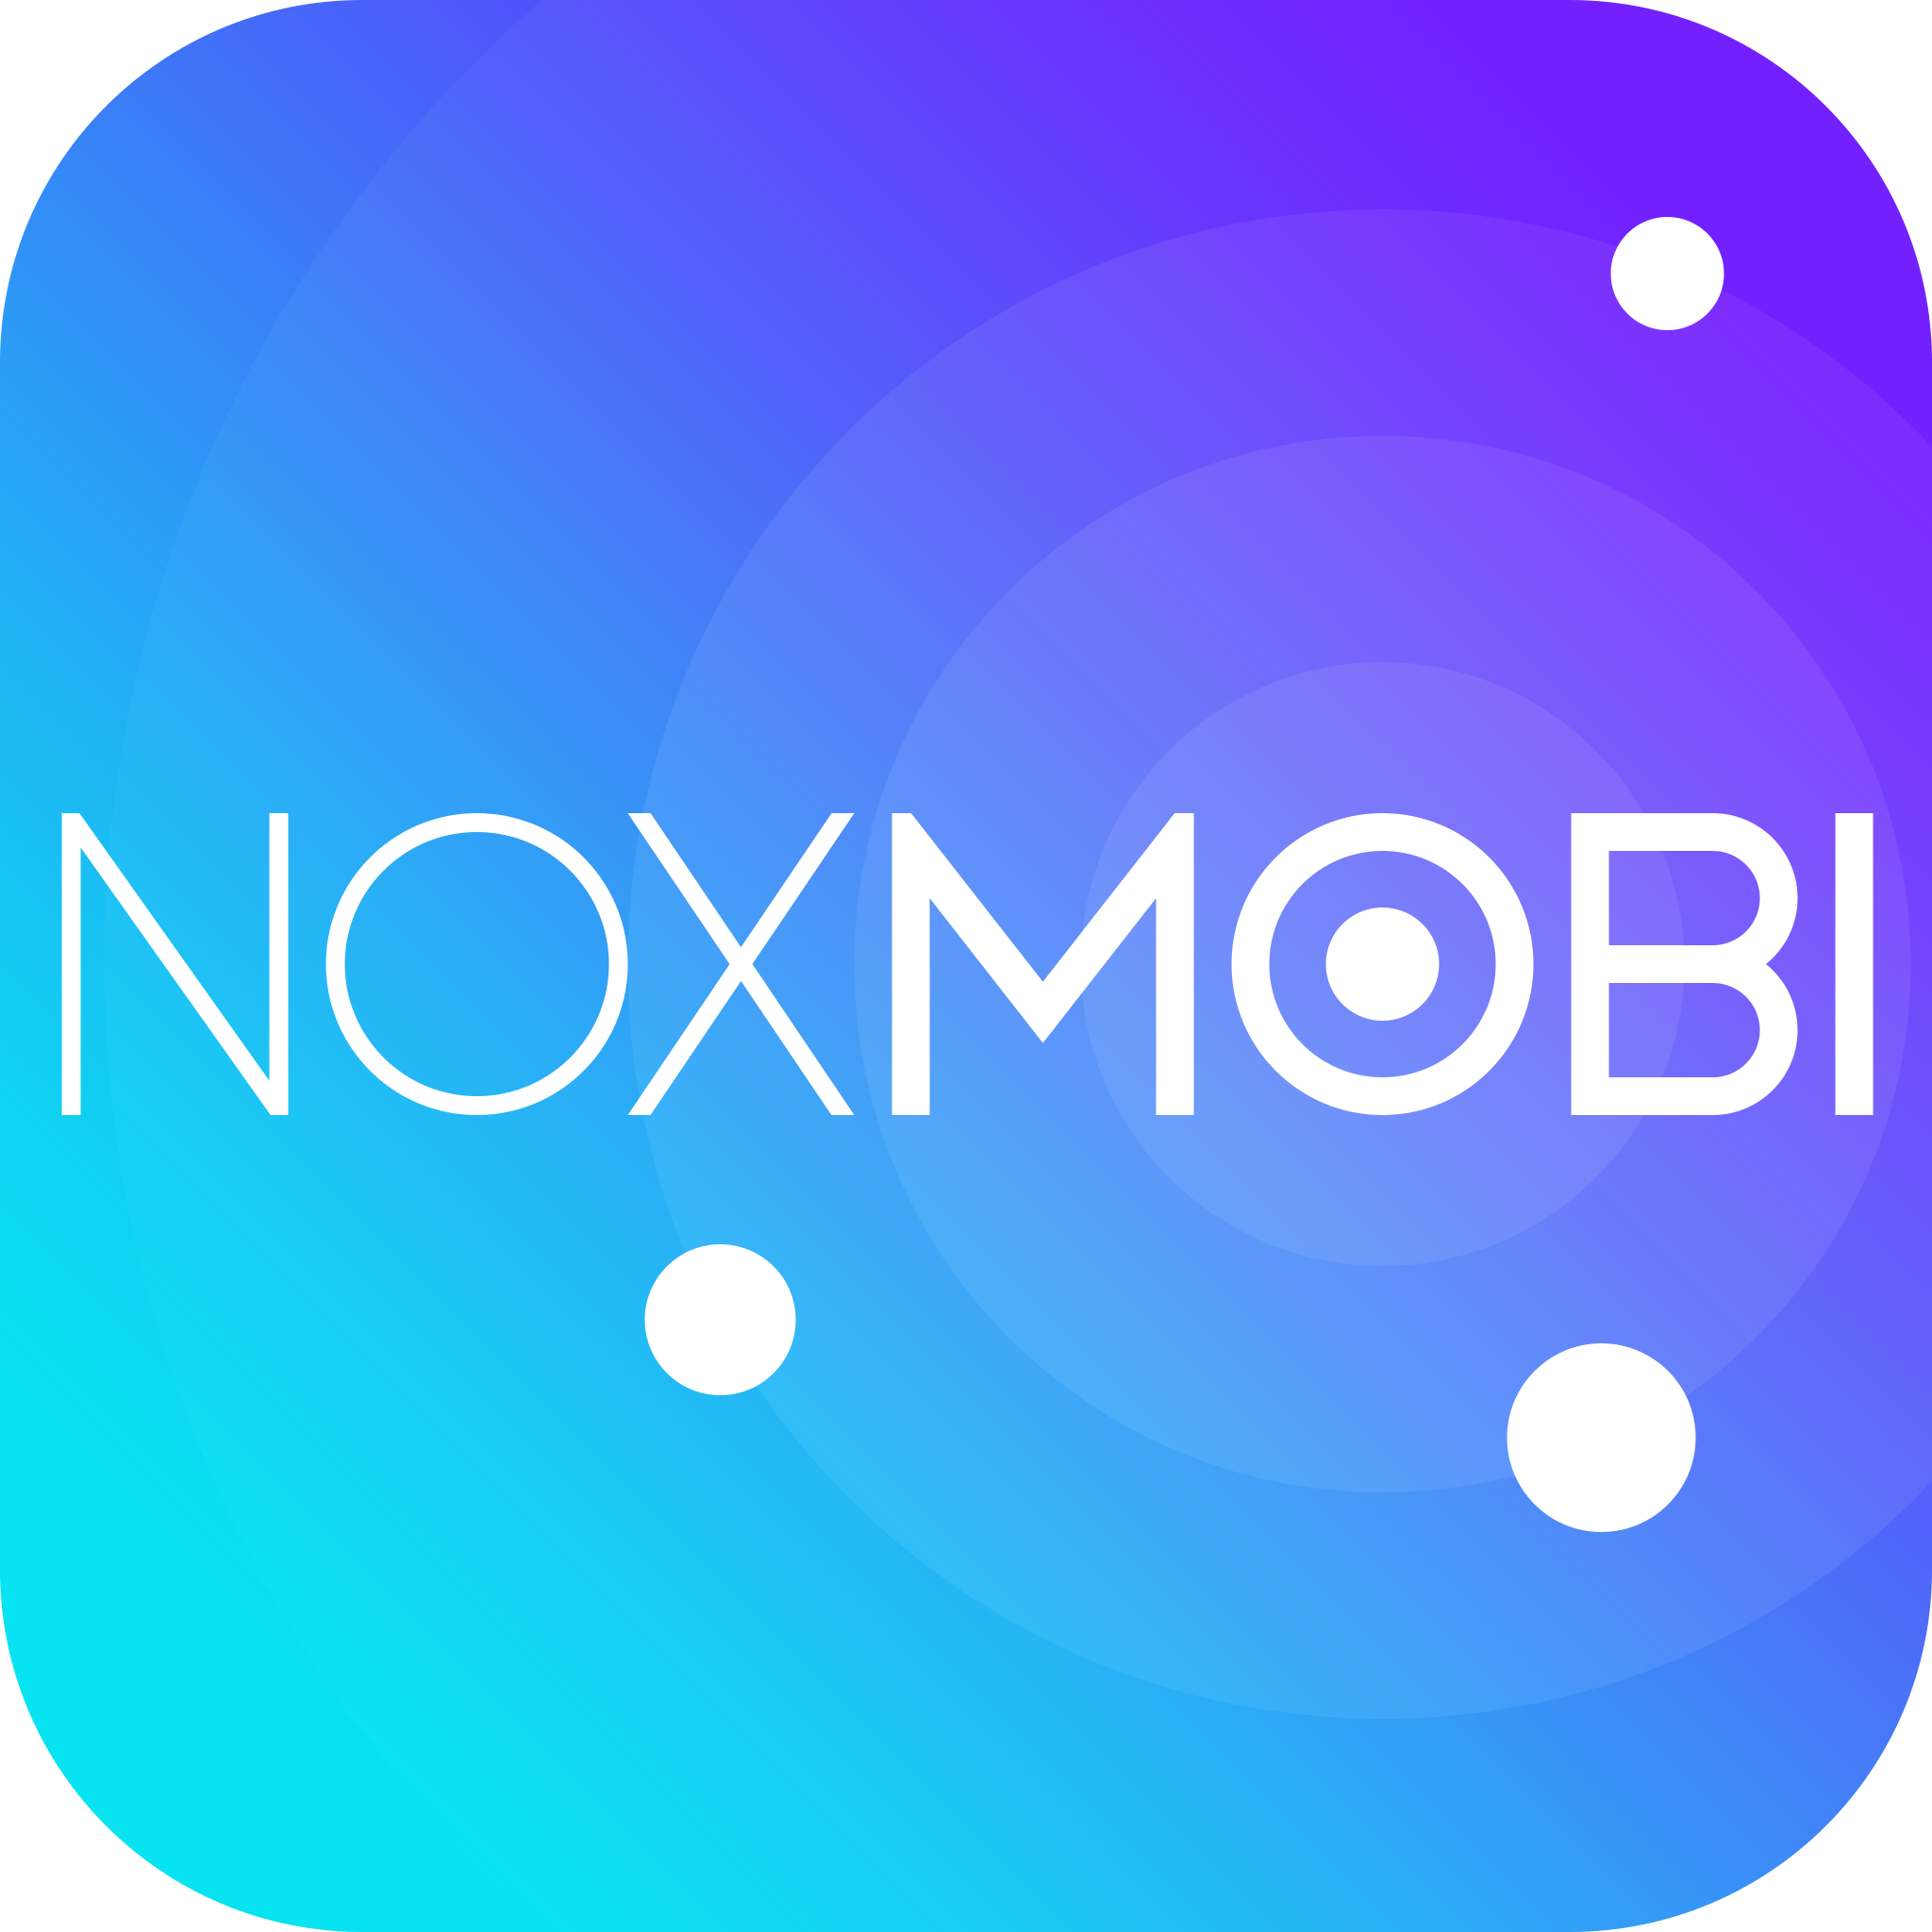 NoxMobi